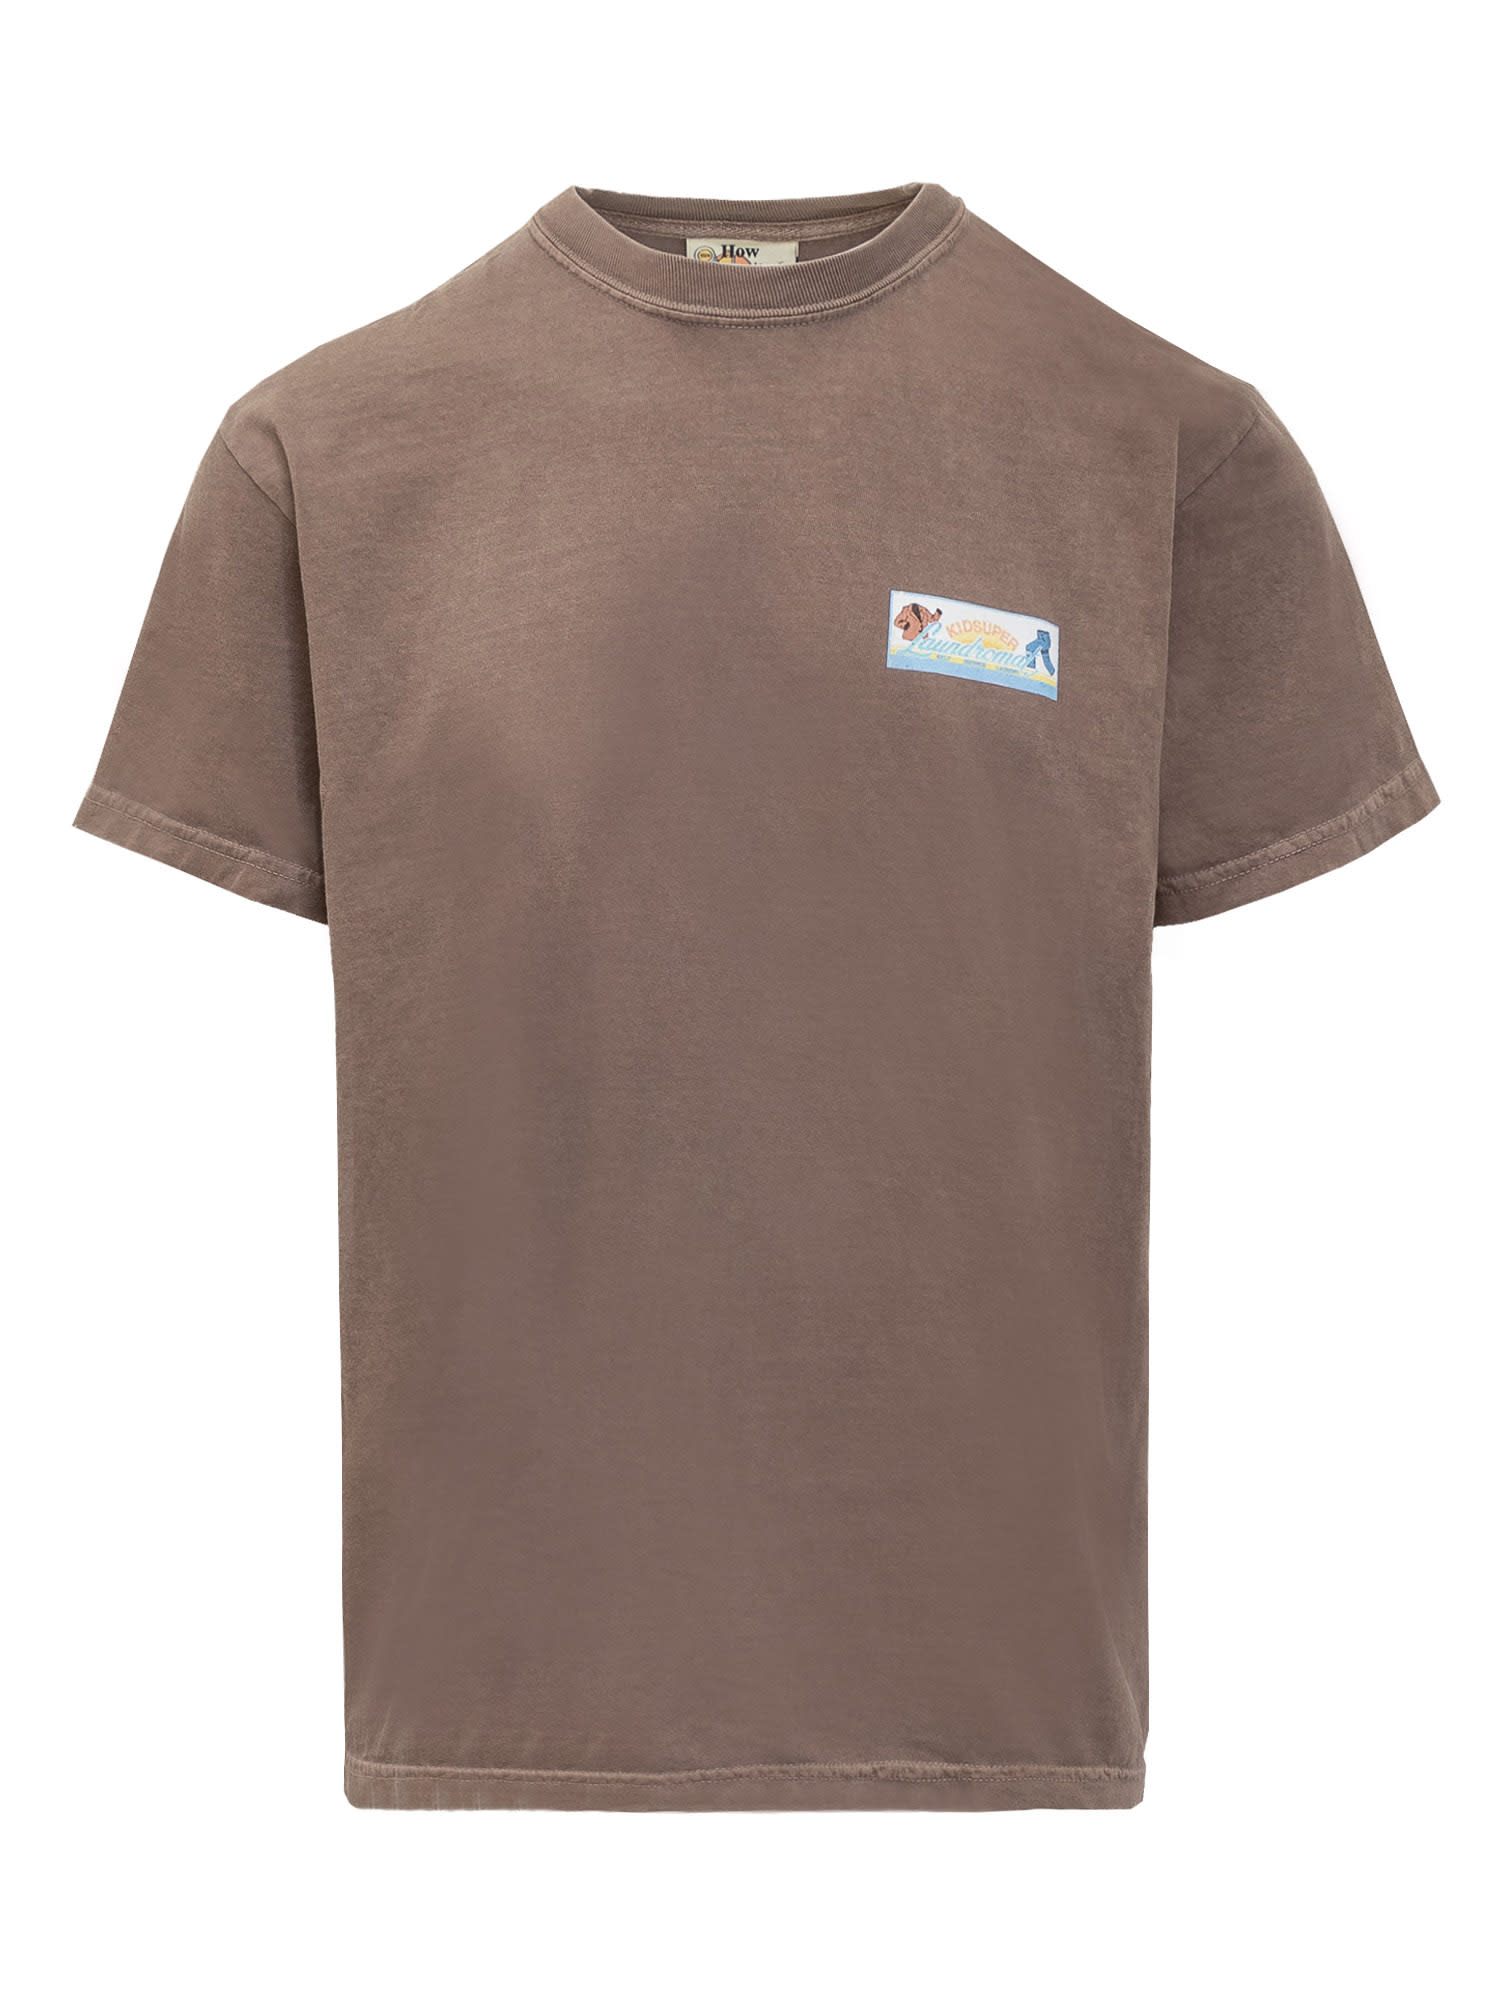 Shop Kidsuper Laundromat T-shirt In Brown